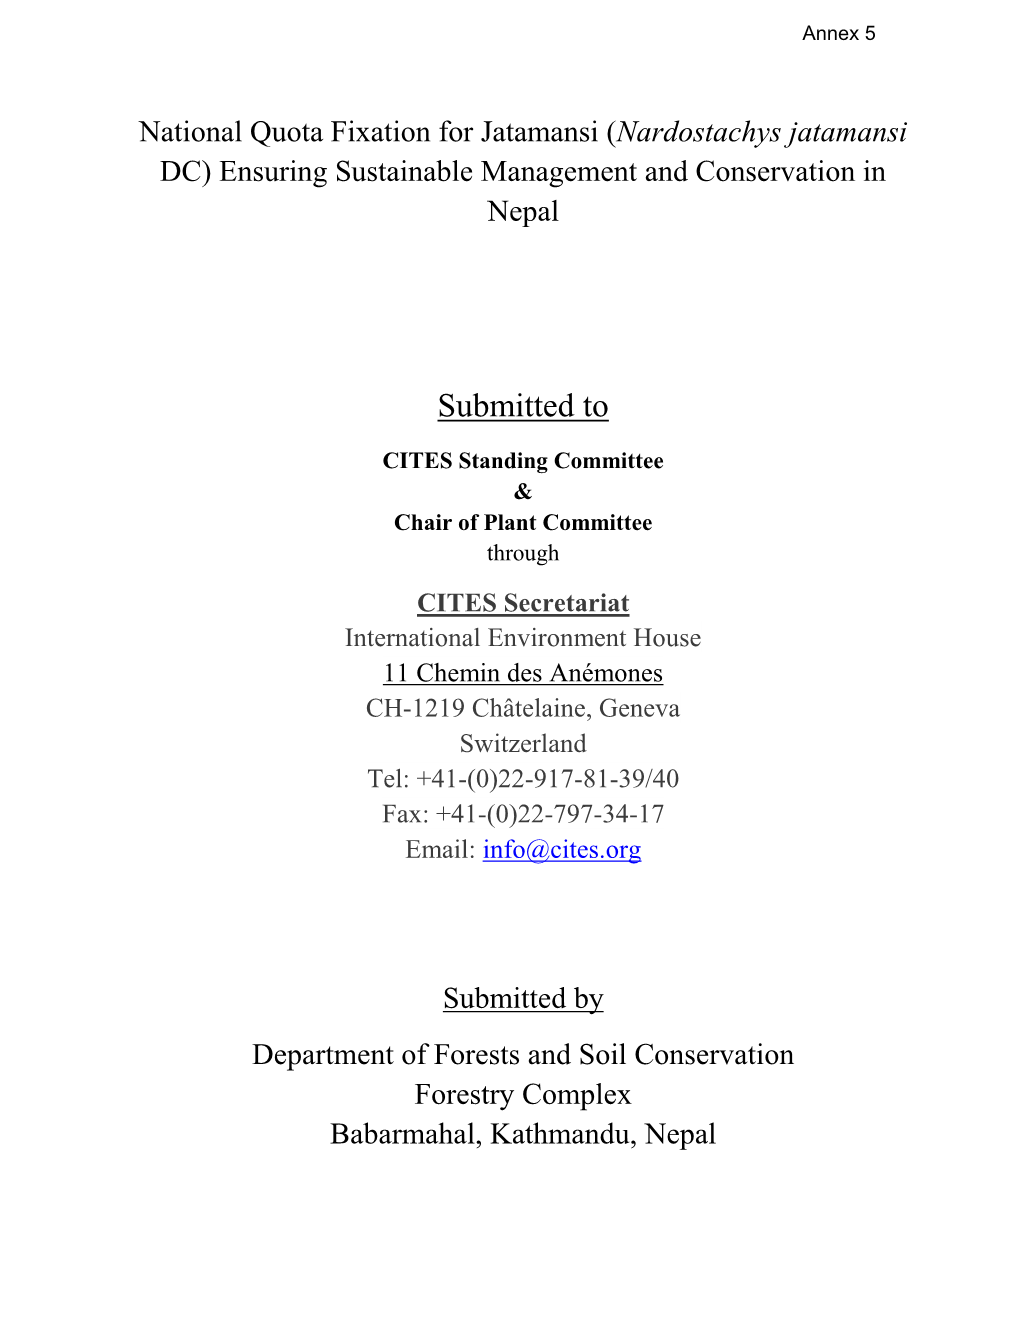 (Nardostachys Jatamansi DC) Ensuring Sustainable Management and Conservation in Nepal